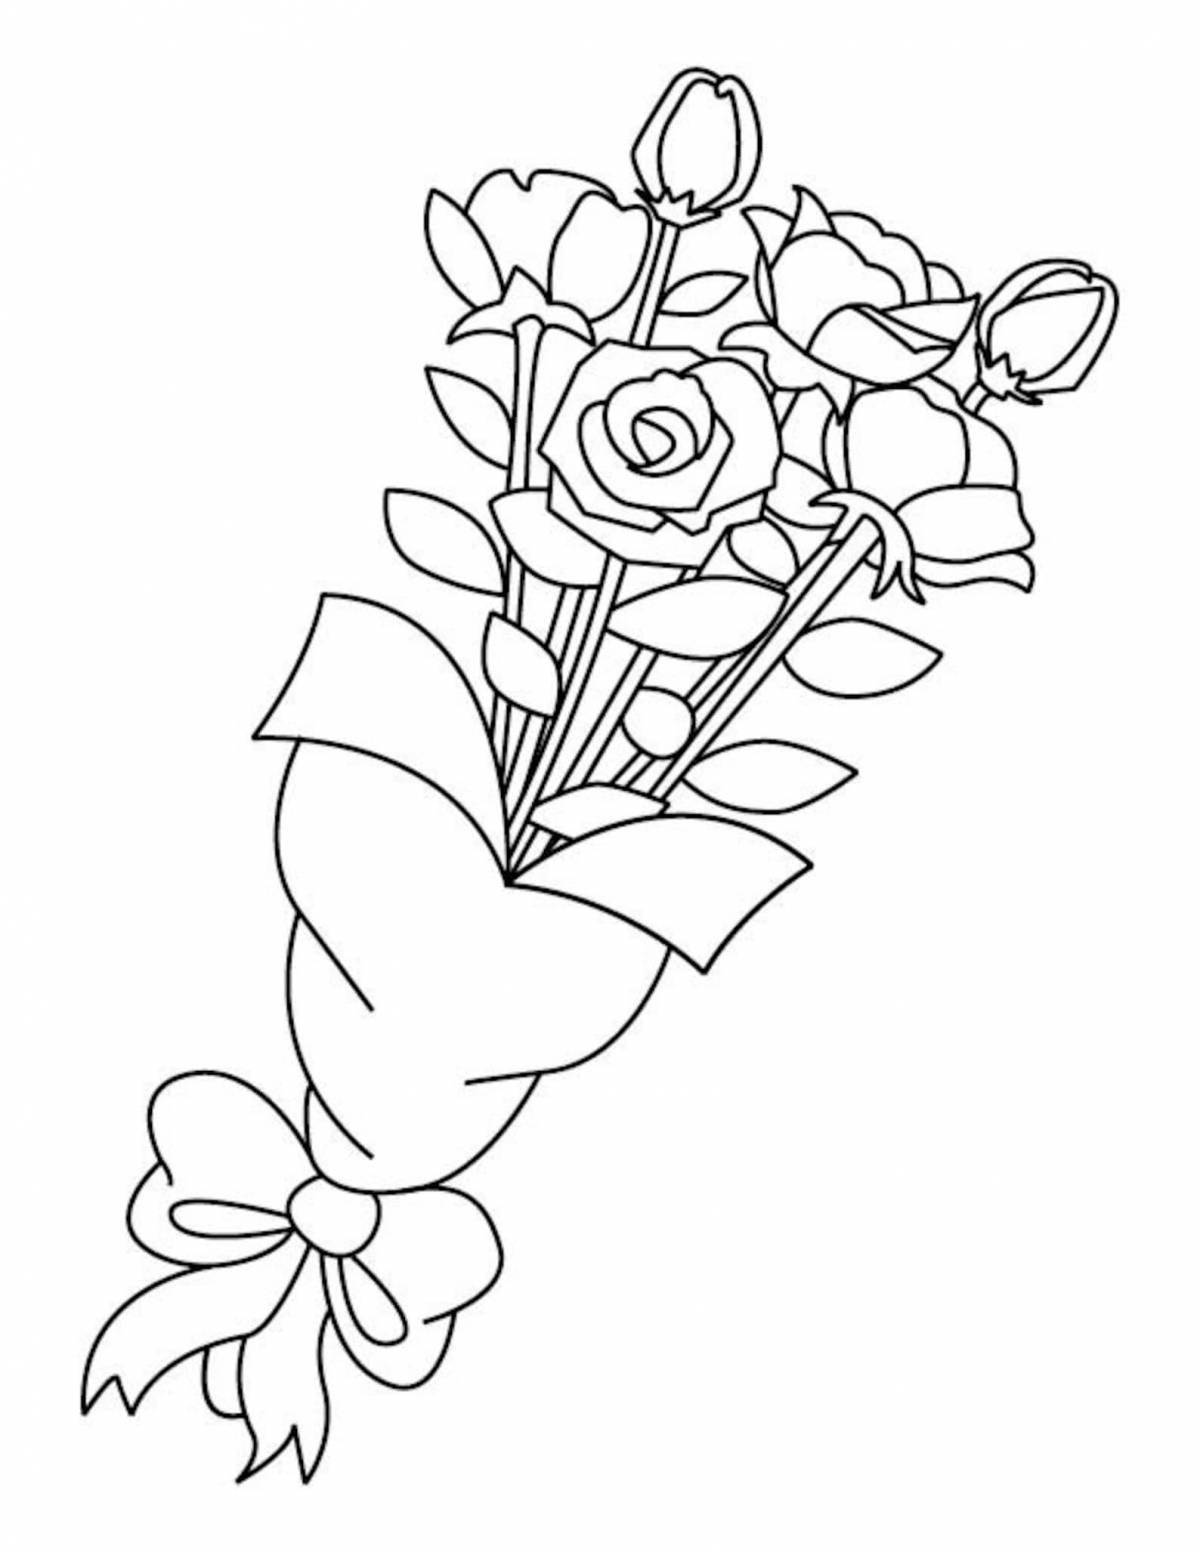 Раскраска манящий букет роз